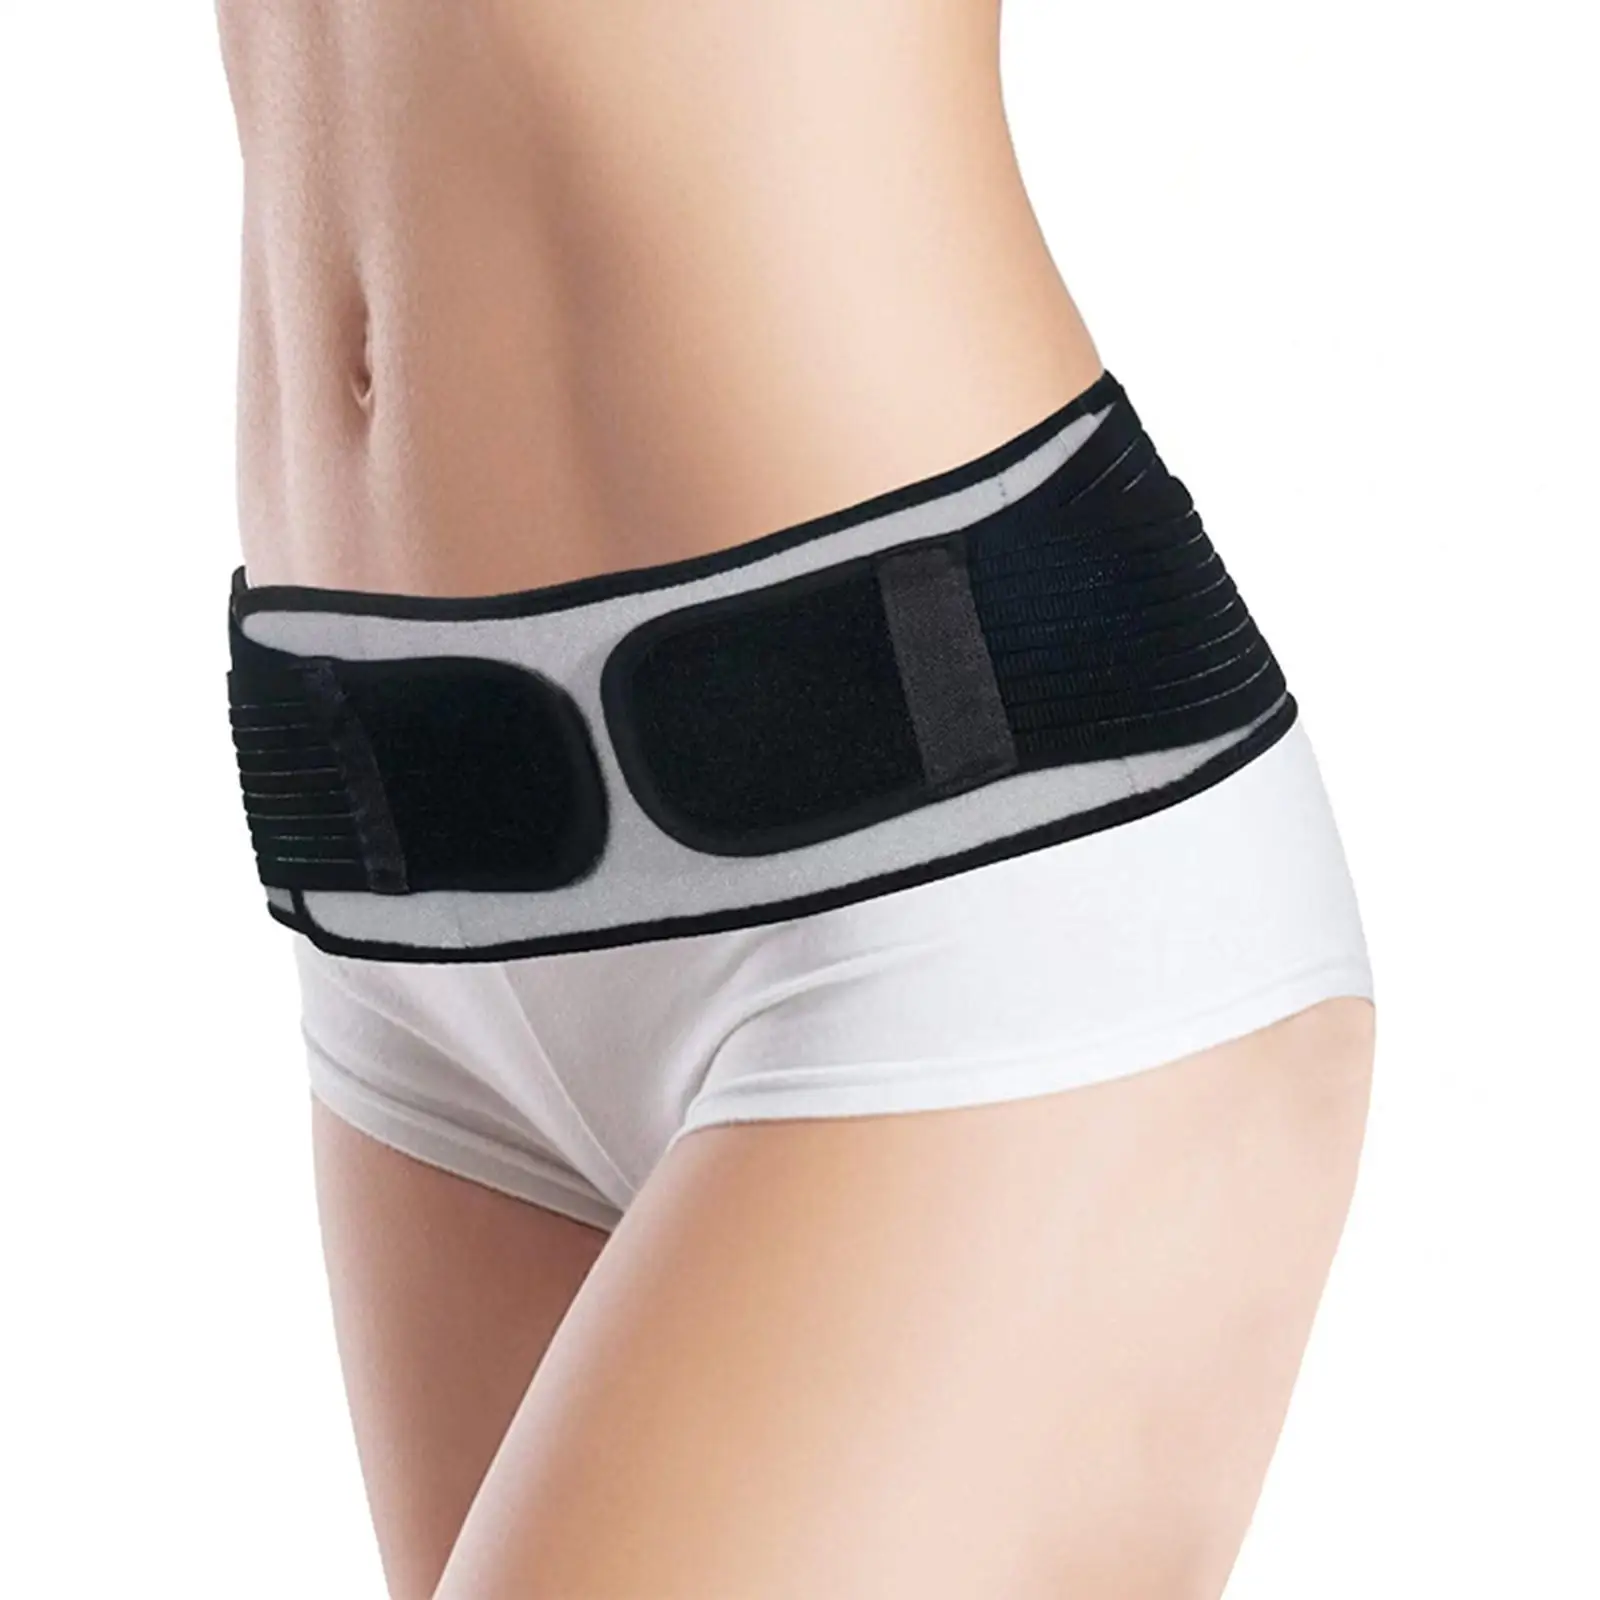 SI Belt Muscles Support Resistant Alleviate Sacroiliac Belt for